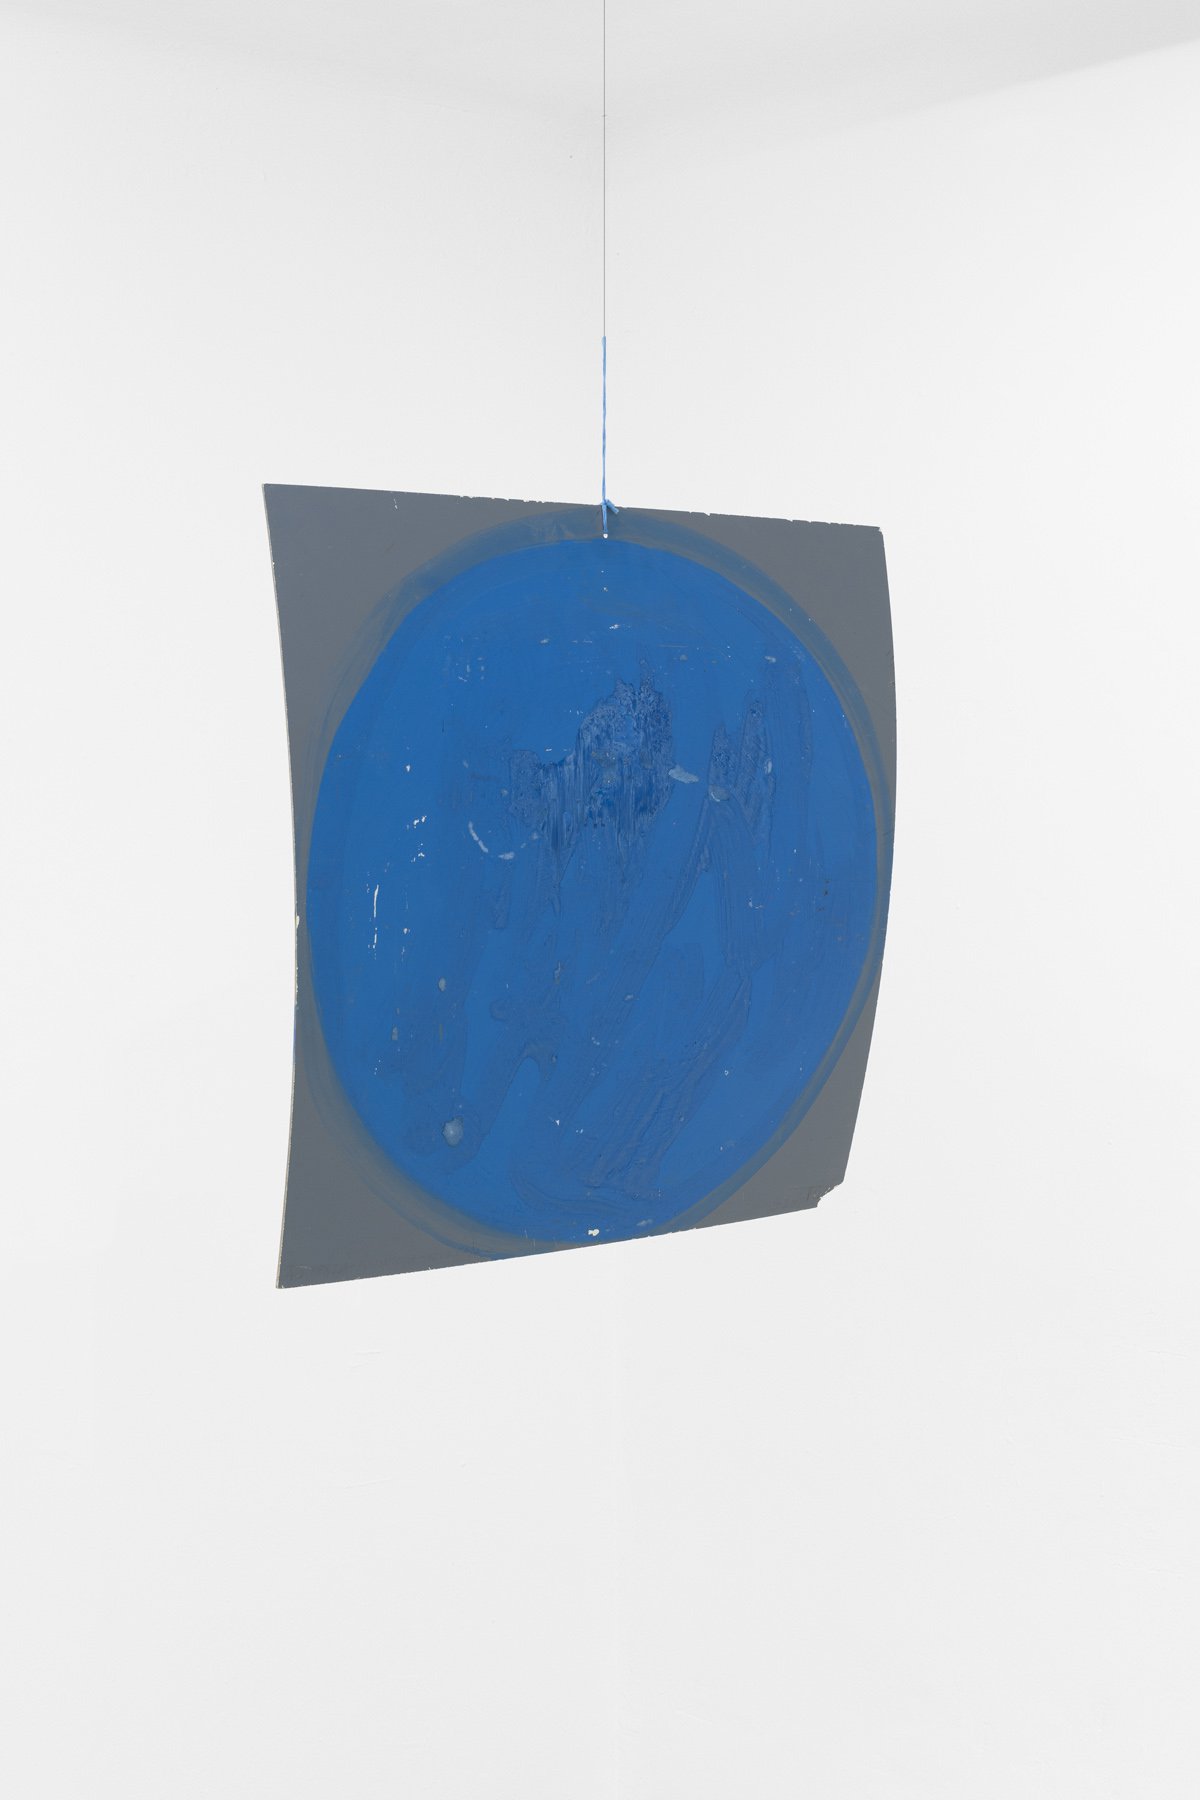 Stano FilkoFrom the series Astrocosmolonomogy, ca. 2000Reflective plexiglass, acrylic paint61 x 61 cm